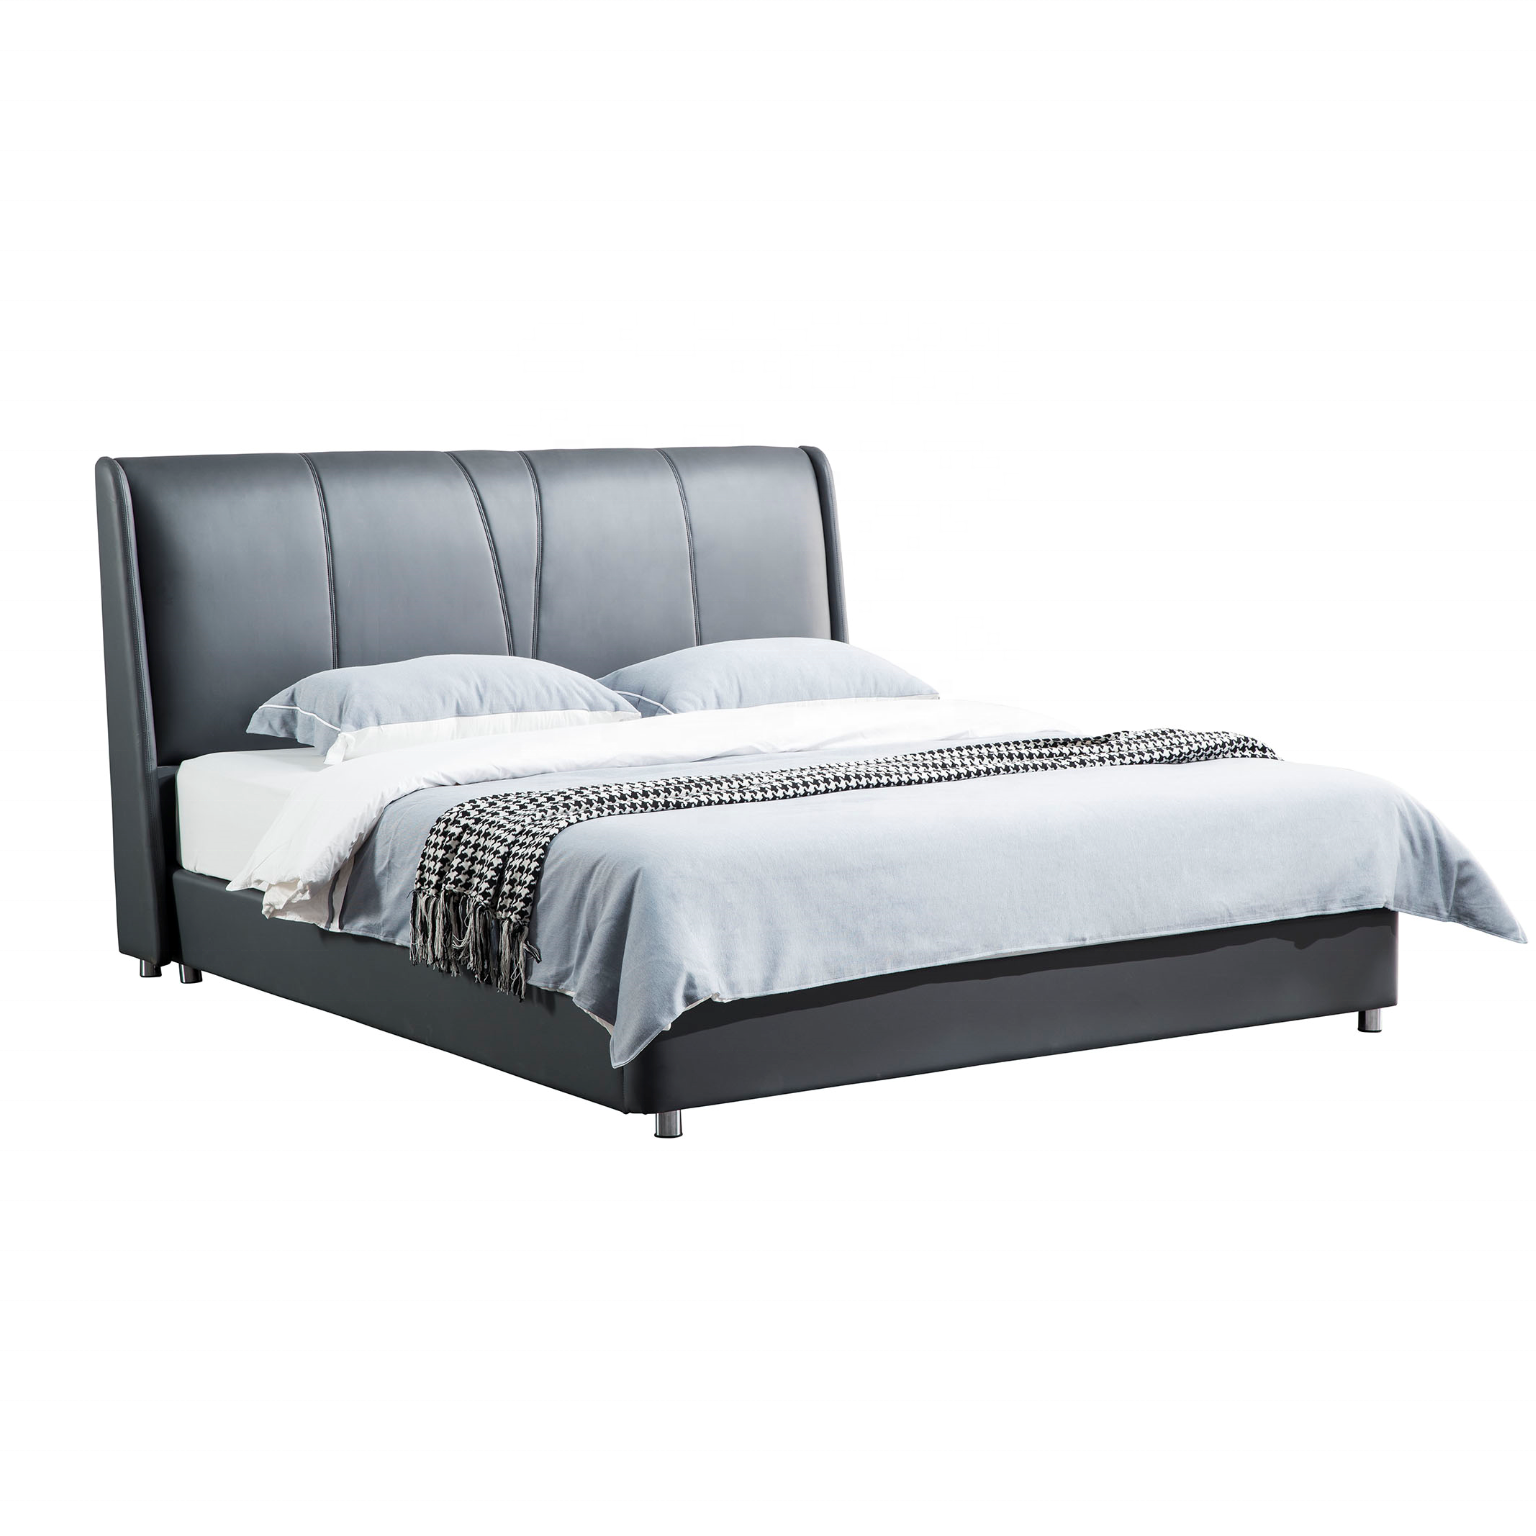 Bedroom ensuite furniture frame double king modern design supports large size wooden luxury bed